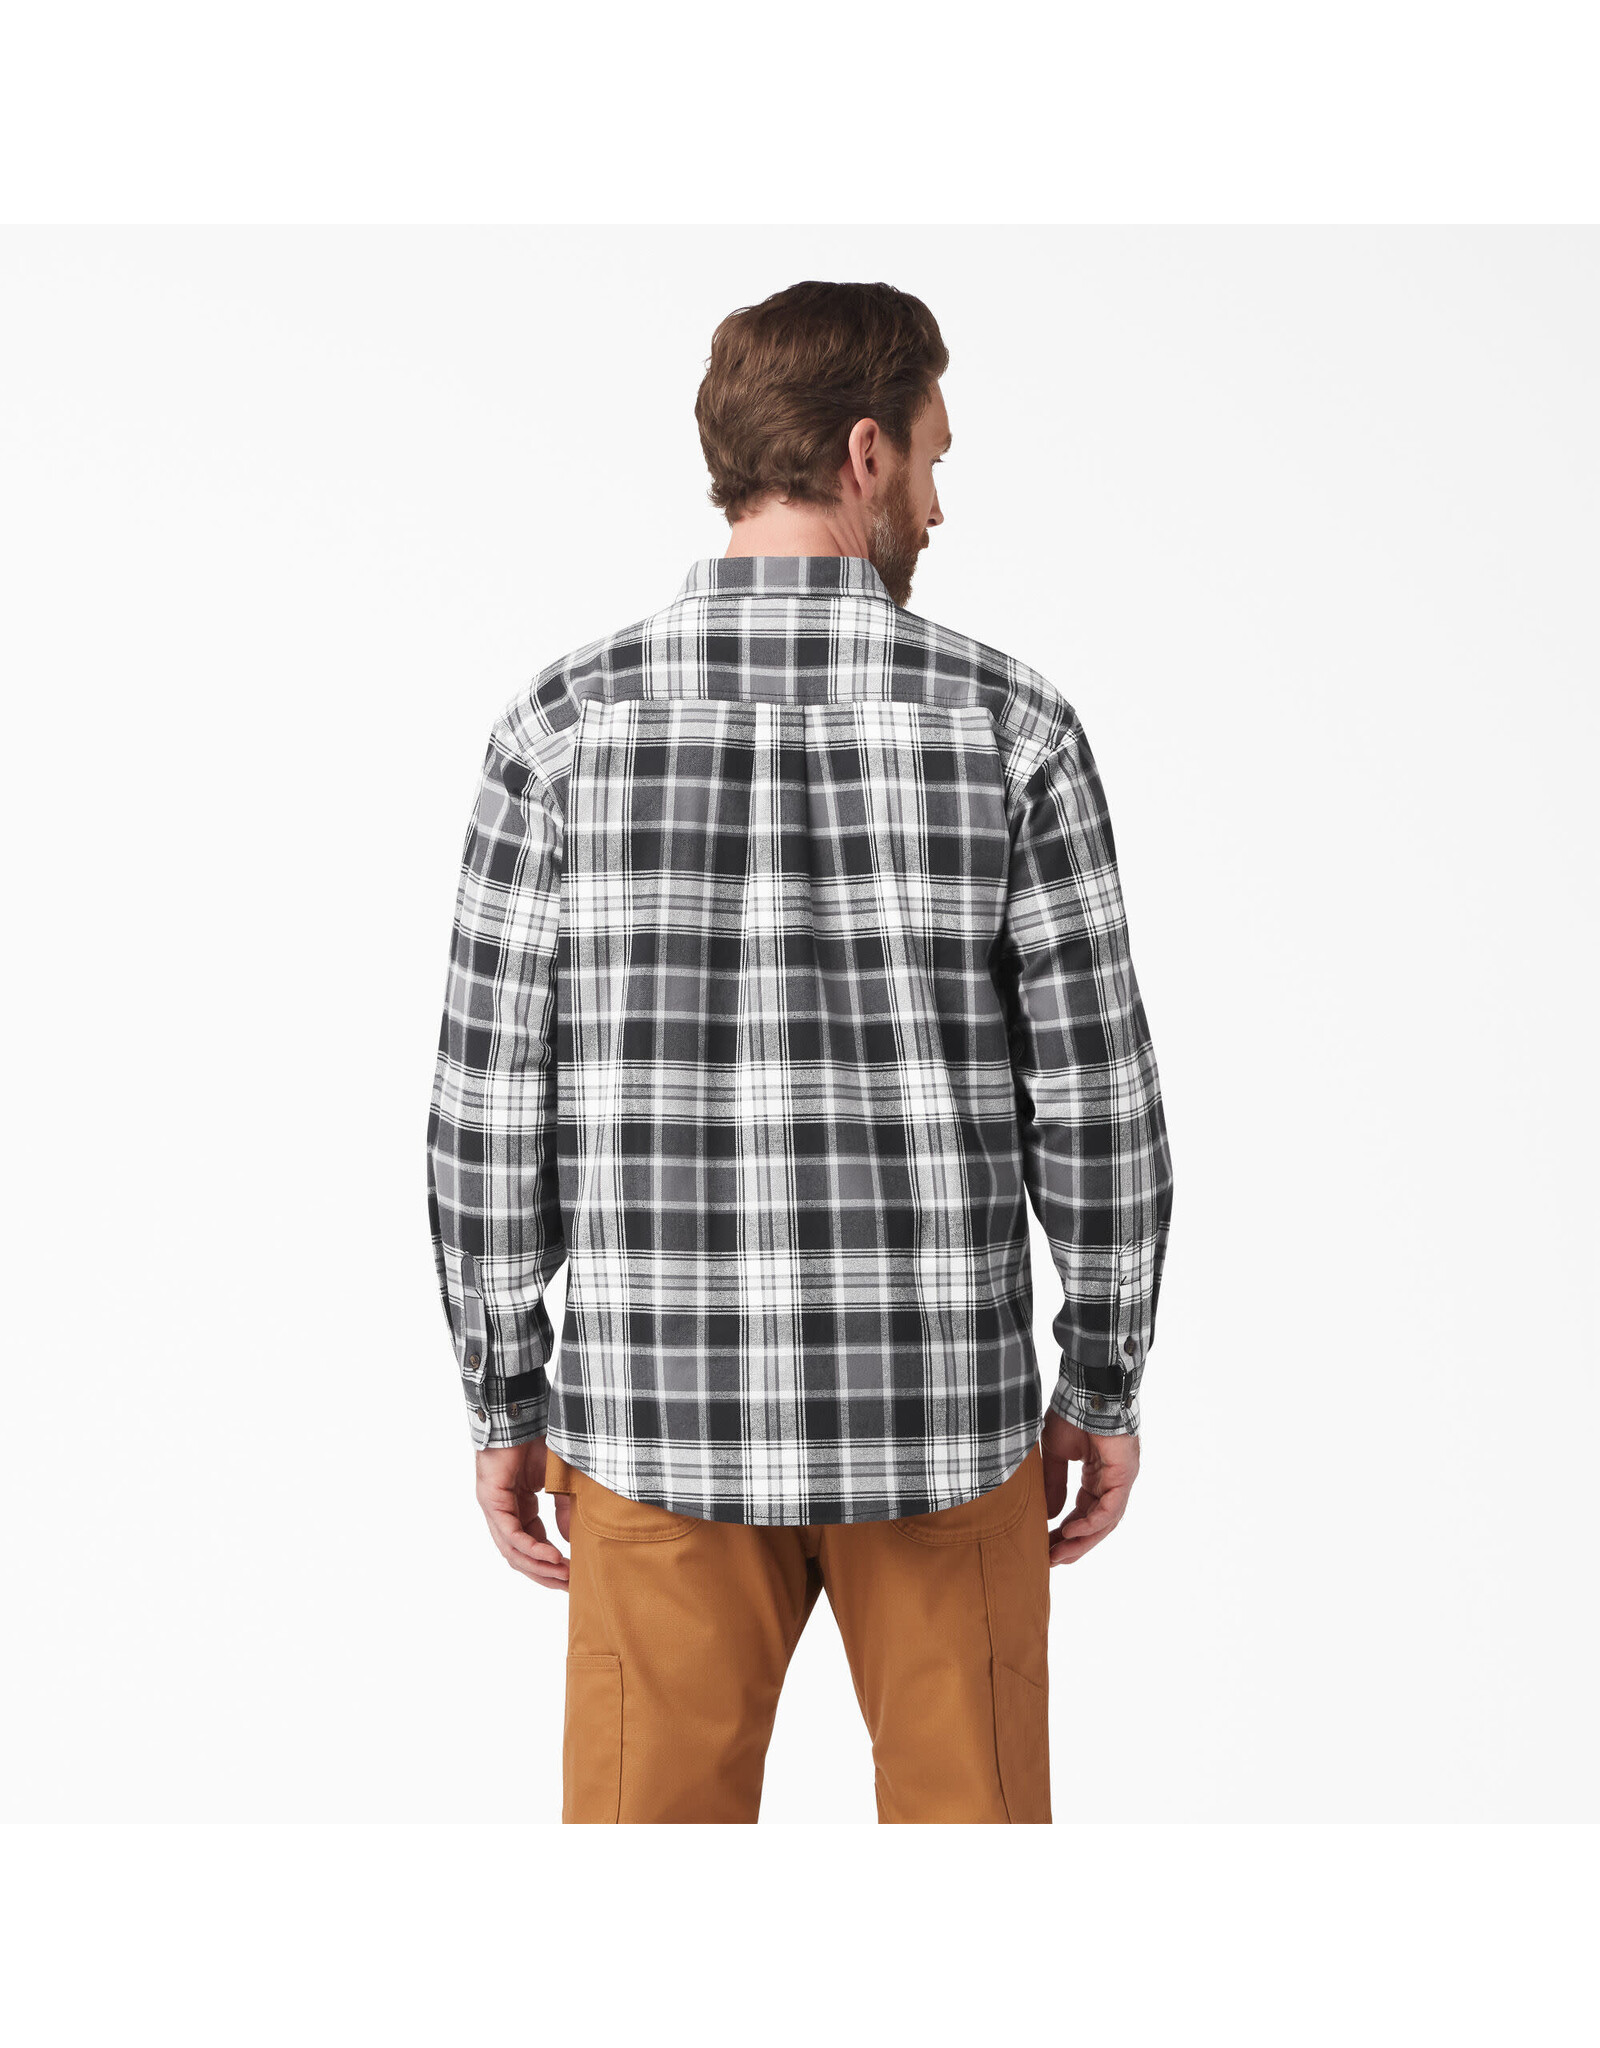 DICKIES Flex Long Sleeve Flannel Shirt Black/Charcoal - WL650A2F